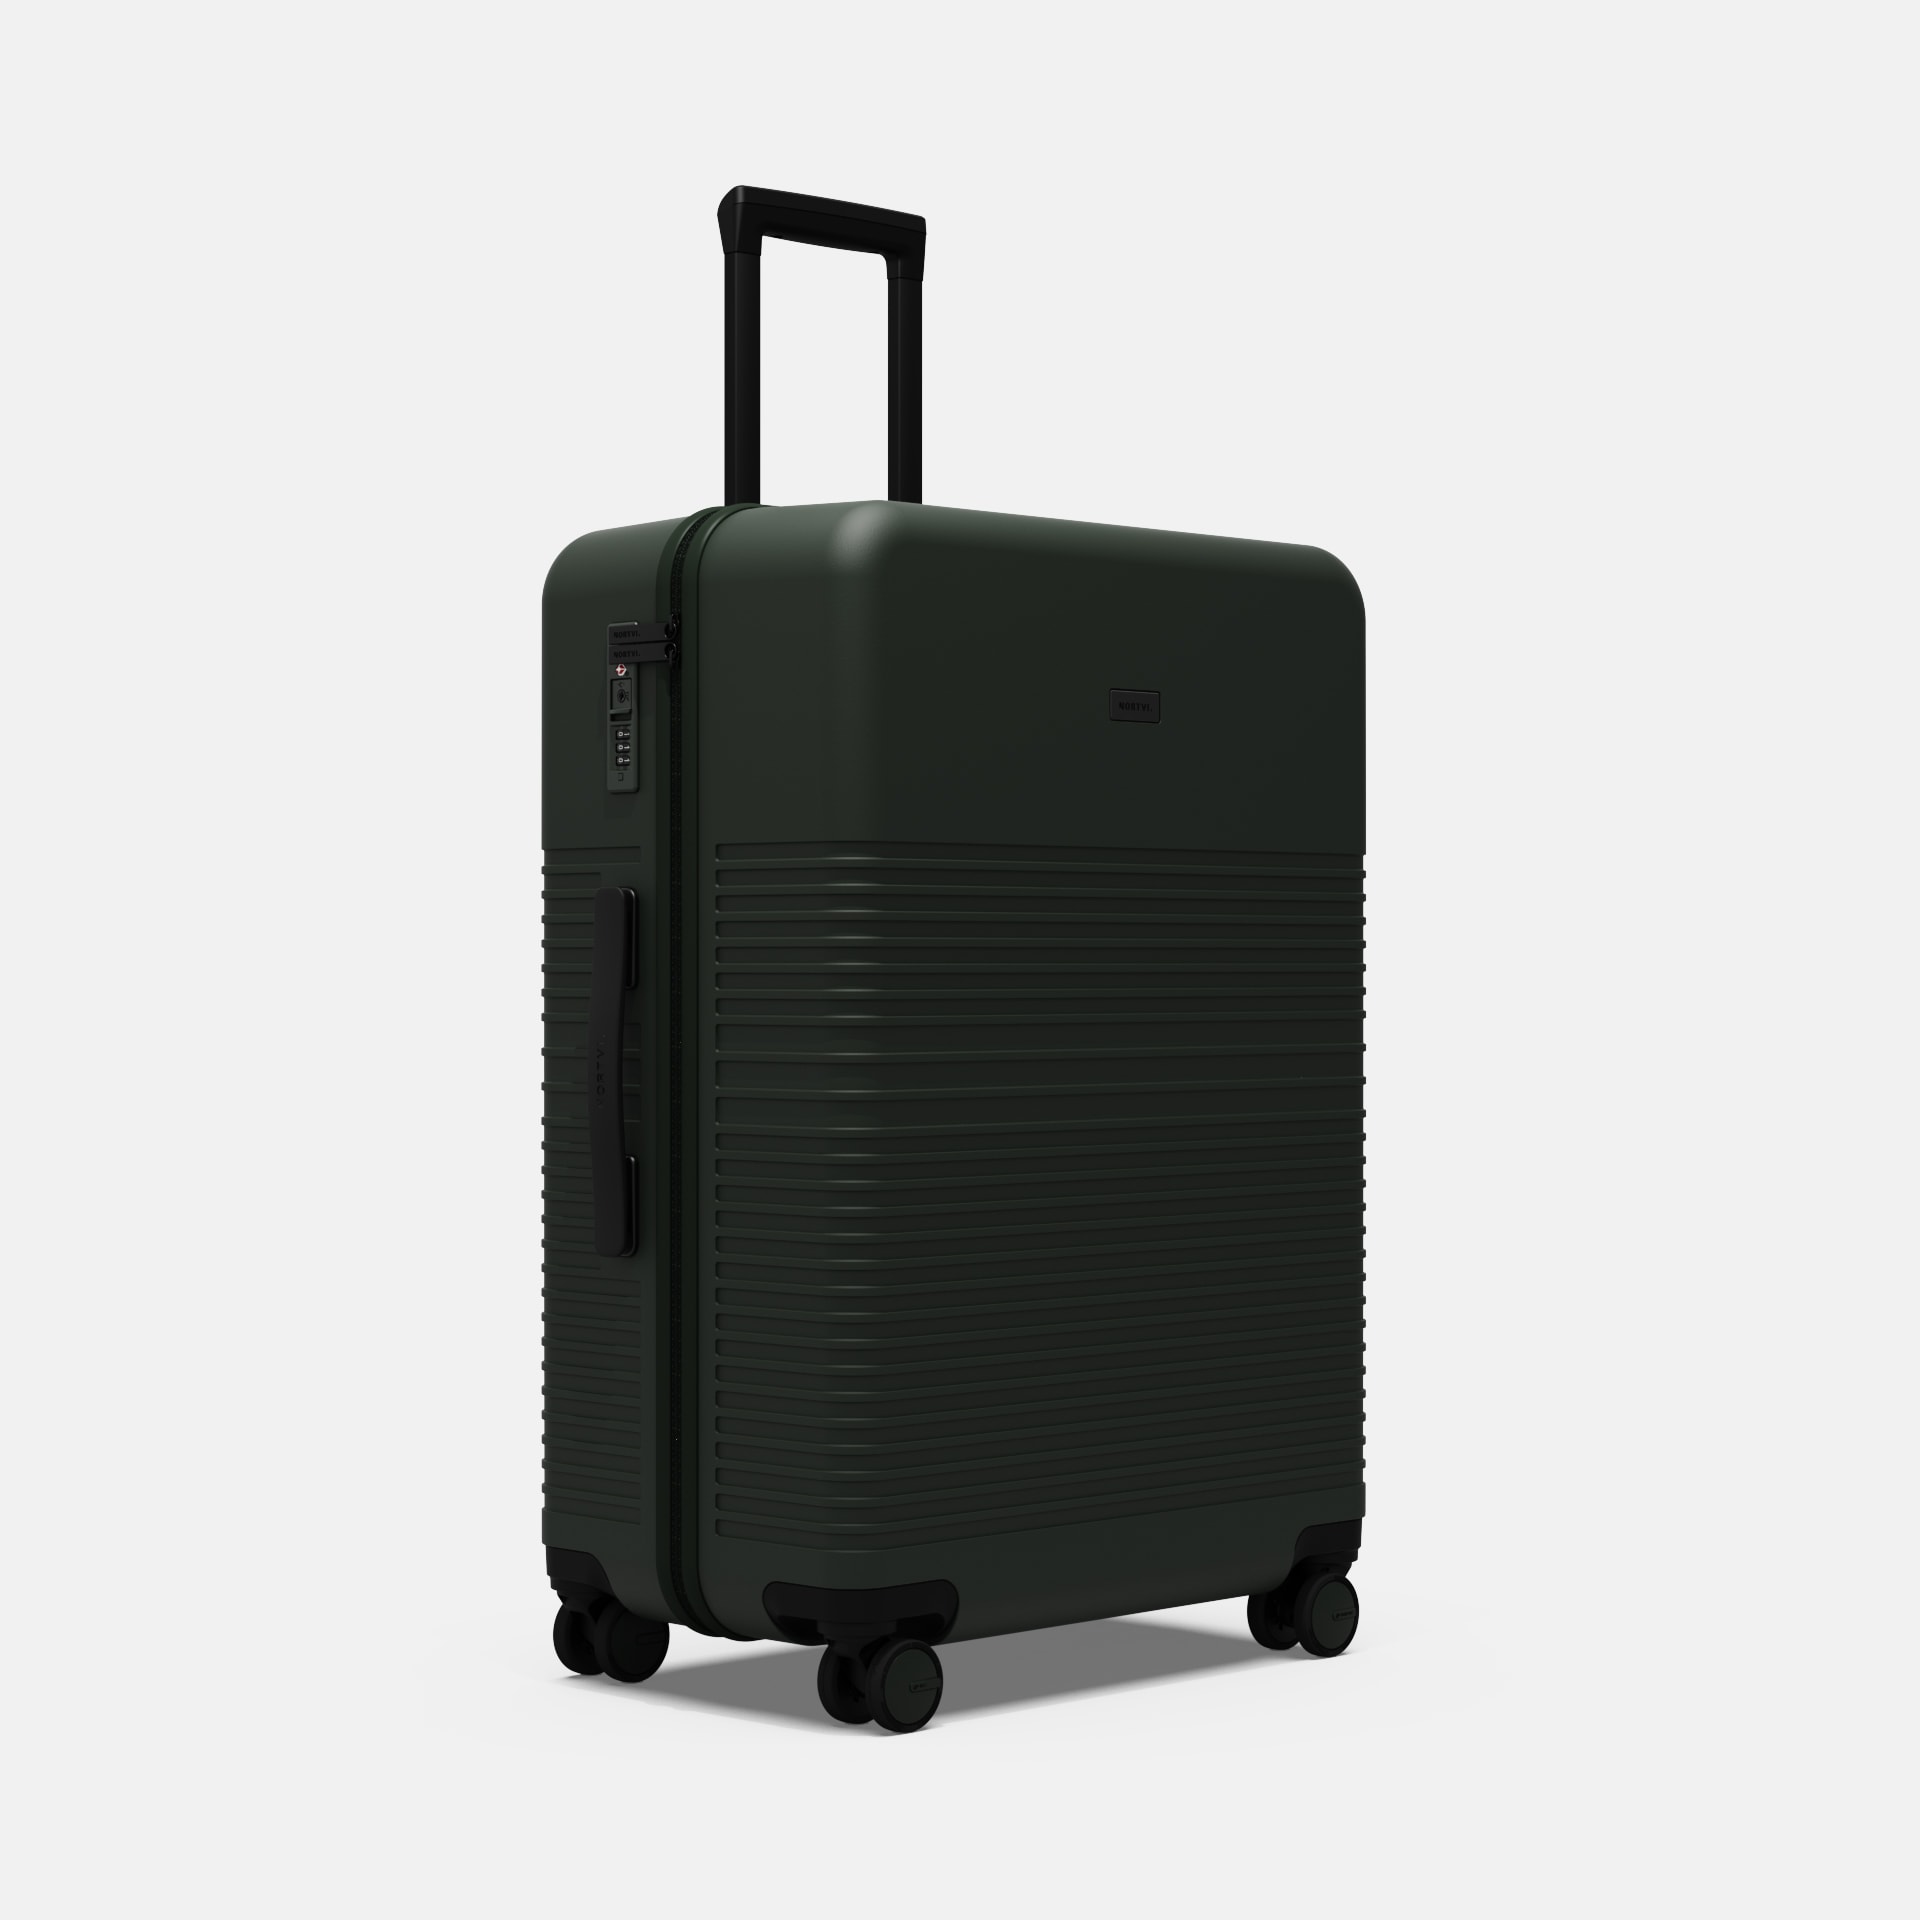 Nortvi dark green check-in suitcase